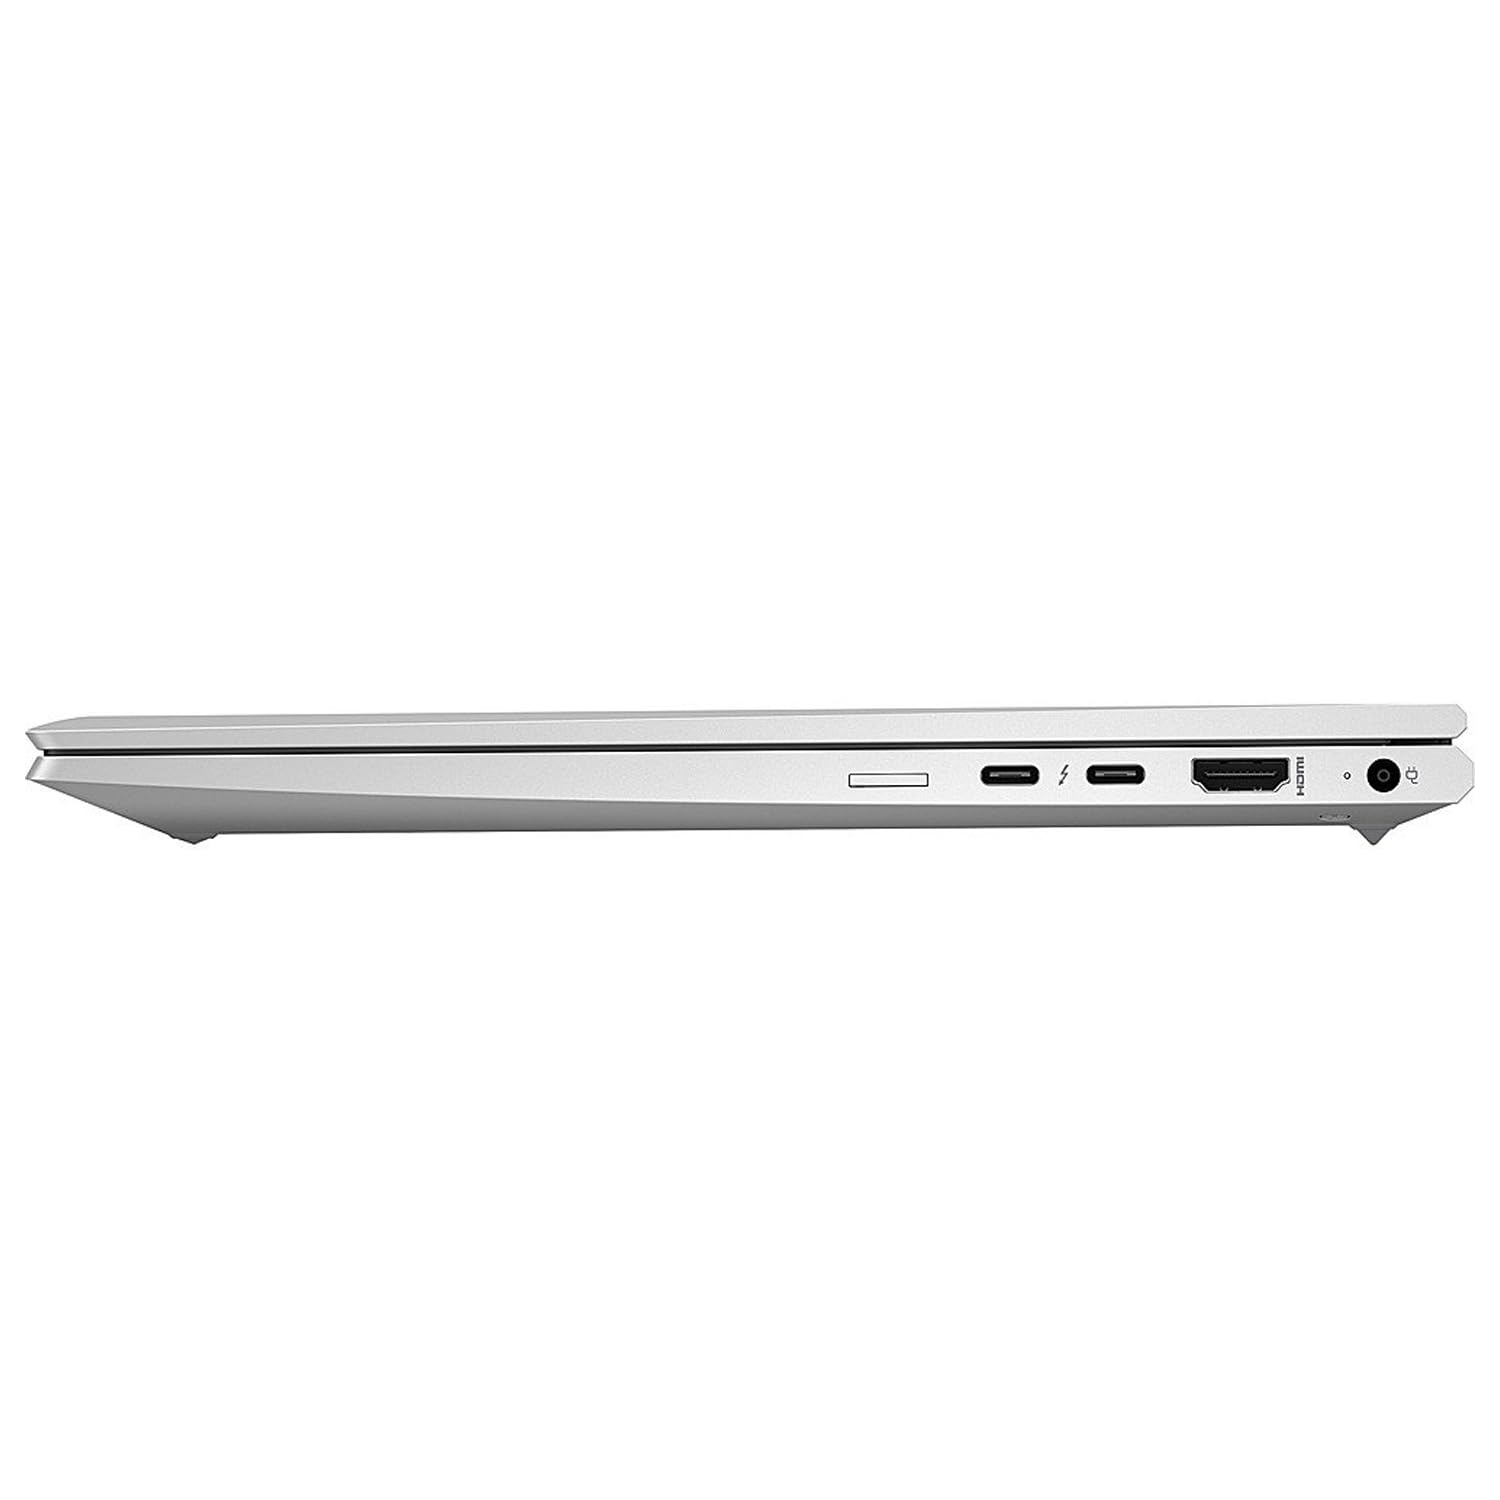 HP EliteBook 840 G8 Business Laptop, 14" FHD Display, Intel Core i7-1165G7, 16GB RAM, 512GB SSD, Backlit Keyboard, FP Reader, SC Reader, HDMI, Webcam, Wi-Fi 6, Windows 11 Pro, Silver